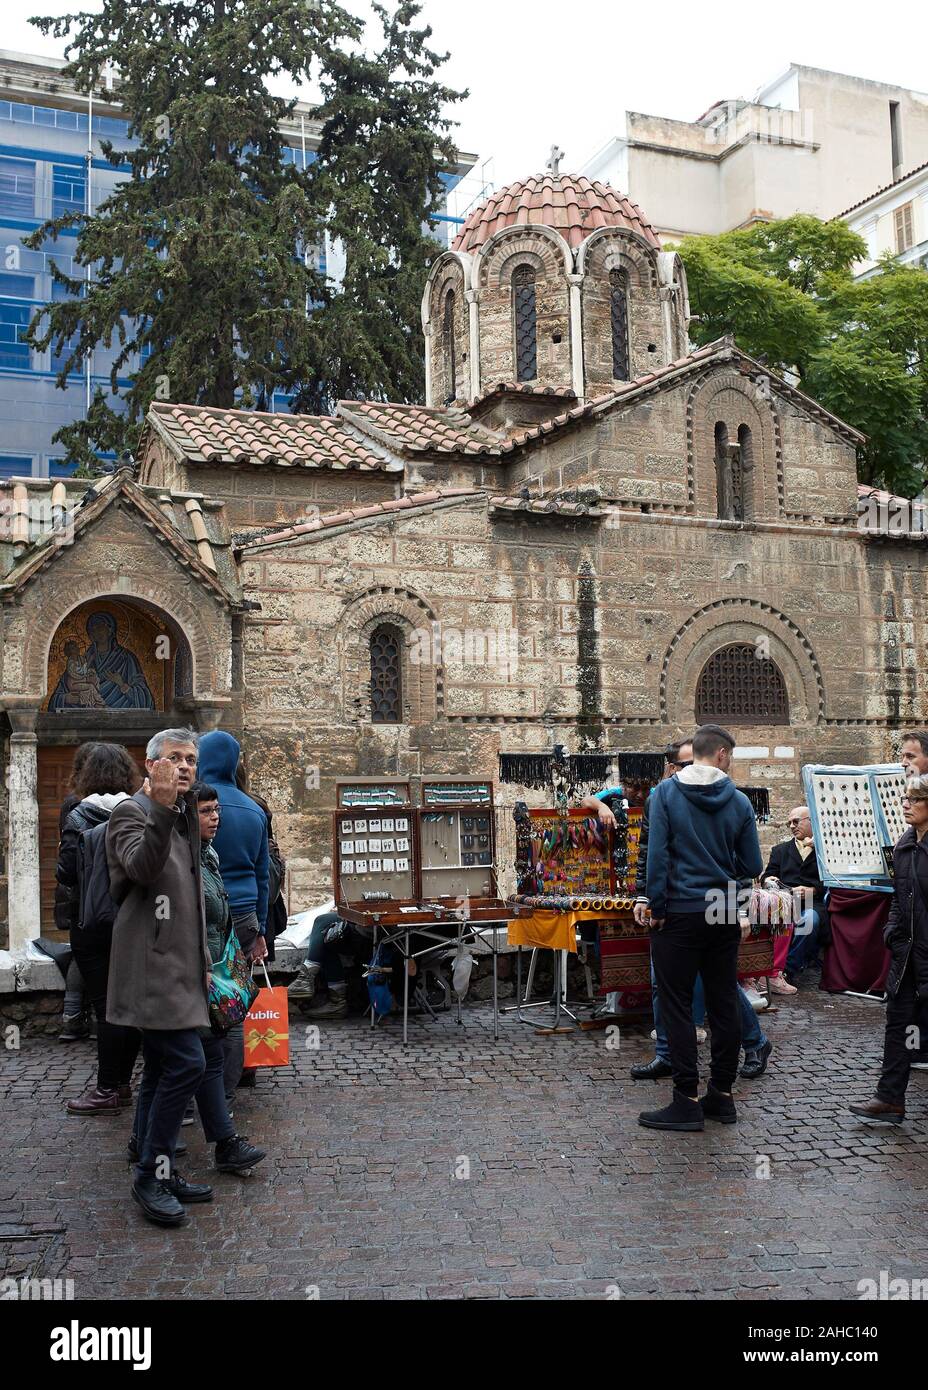 Strada del mercato ad Atene, kapnikarea chiesa Foto Stock